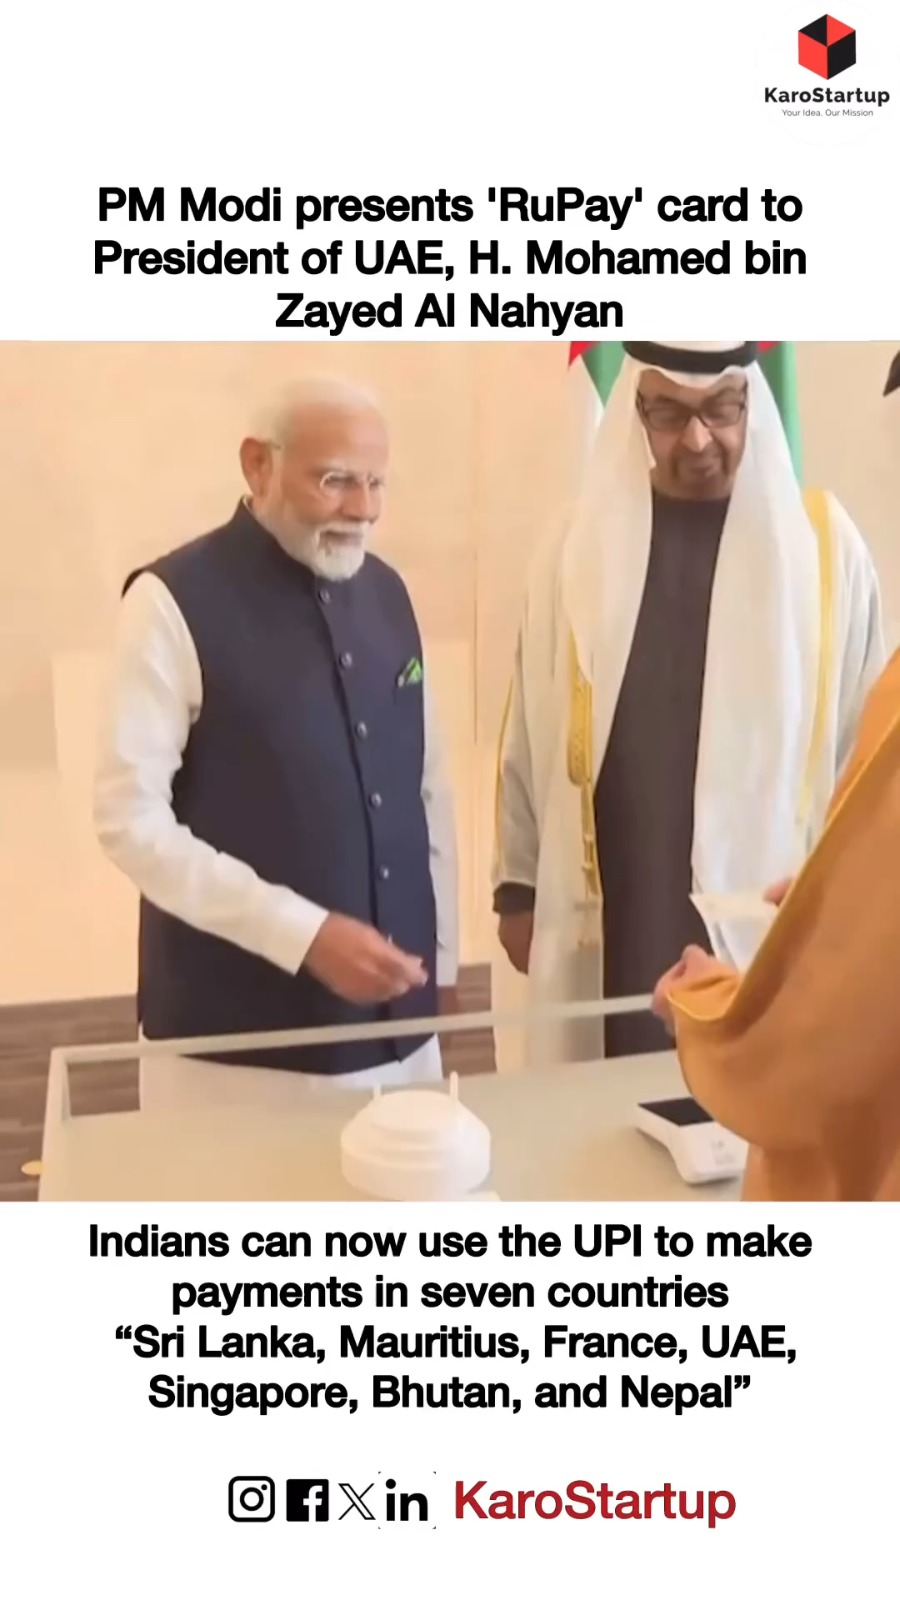 PM Modi presents ‘RuPay’ card to President of UAE, H. Mohamed bin Zayed Al Nahyan